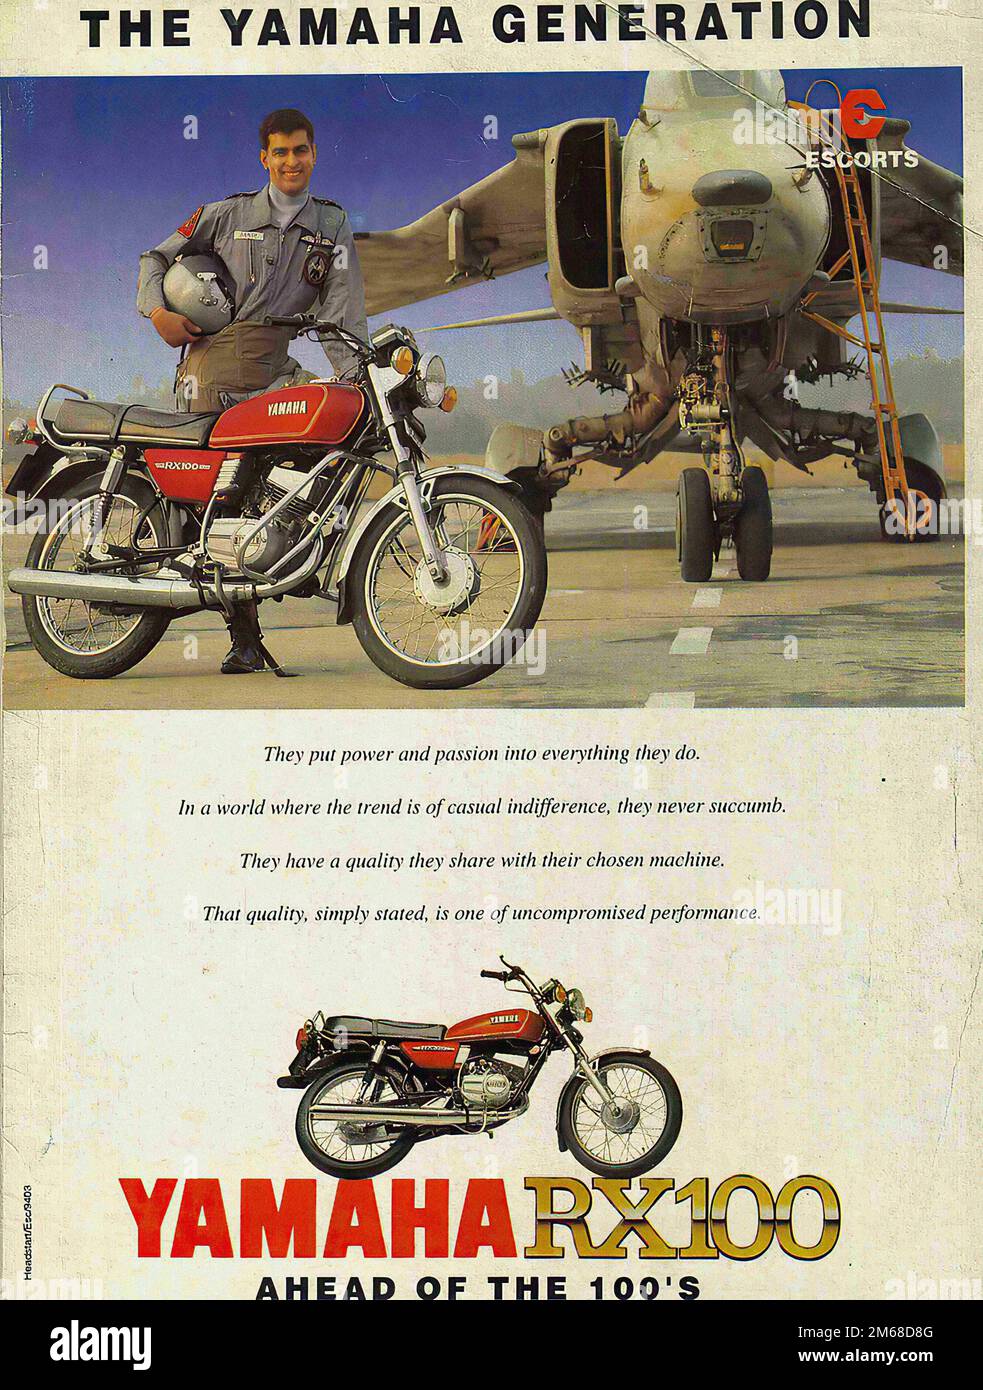 YAMAHA RX 100 - Vintage Motorcycle Advertising Stock Photo - Alamy